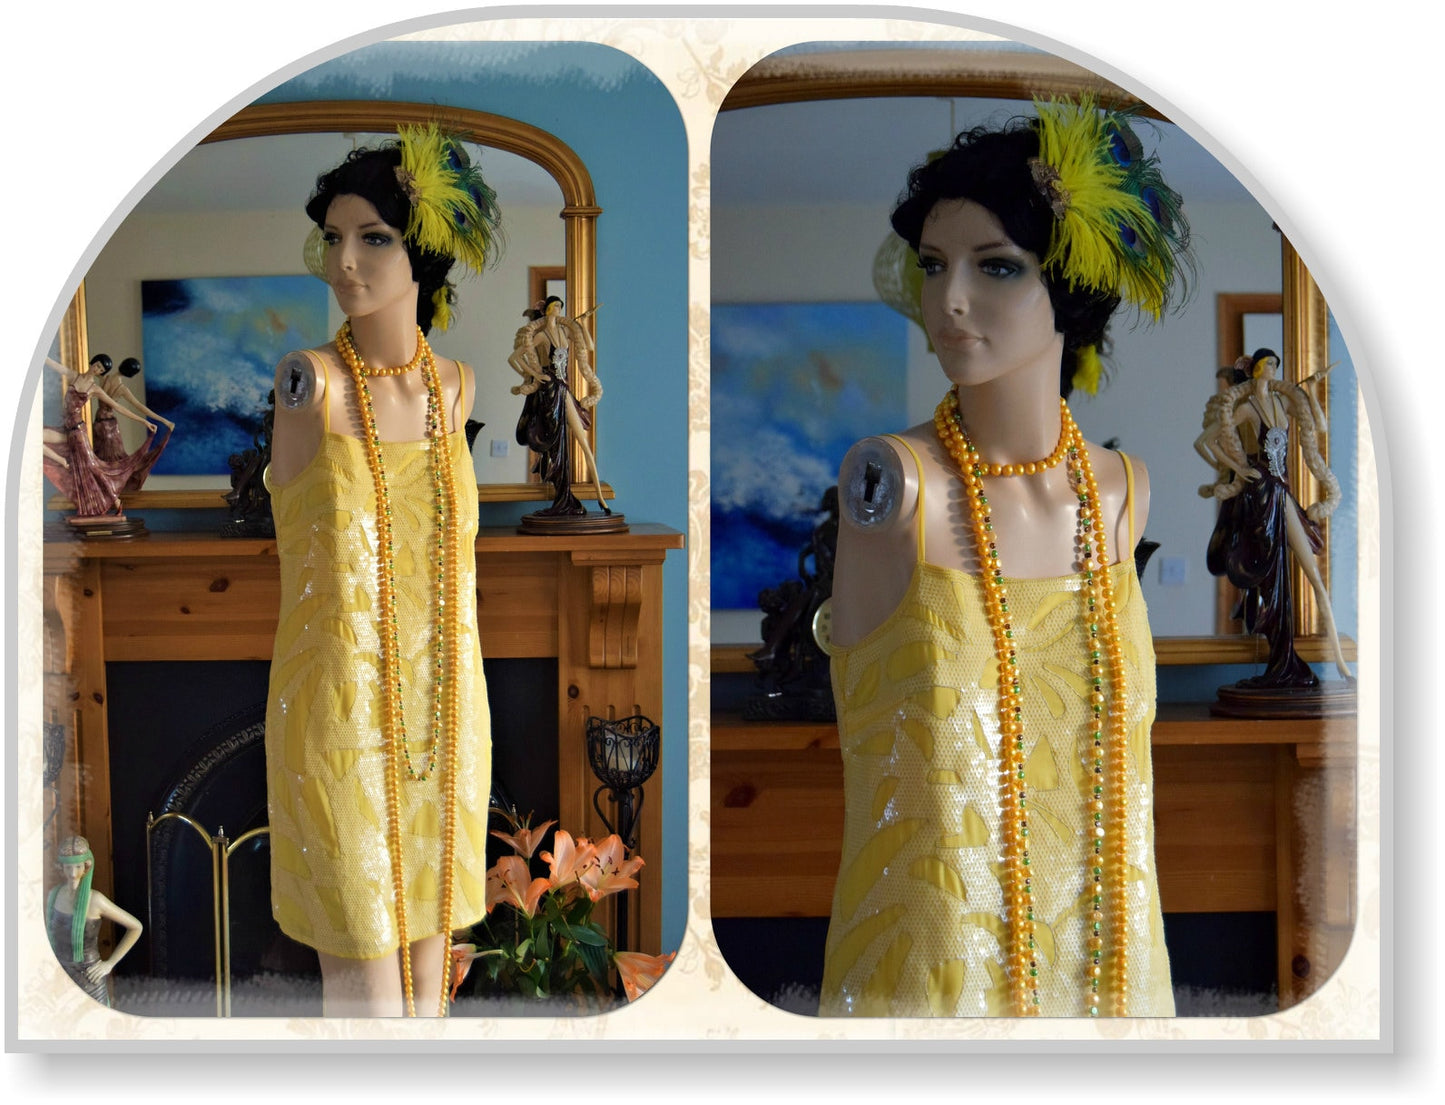 flapper dress 1920s dress flapper sequin dress Great Gatsby dress flapper yellow dress 1920s yellow dress Charlston dress size UK 10 US 6